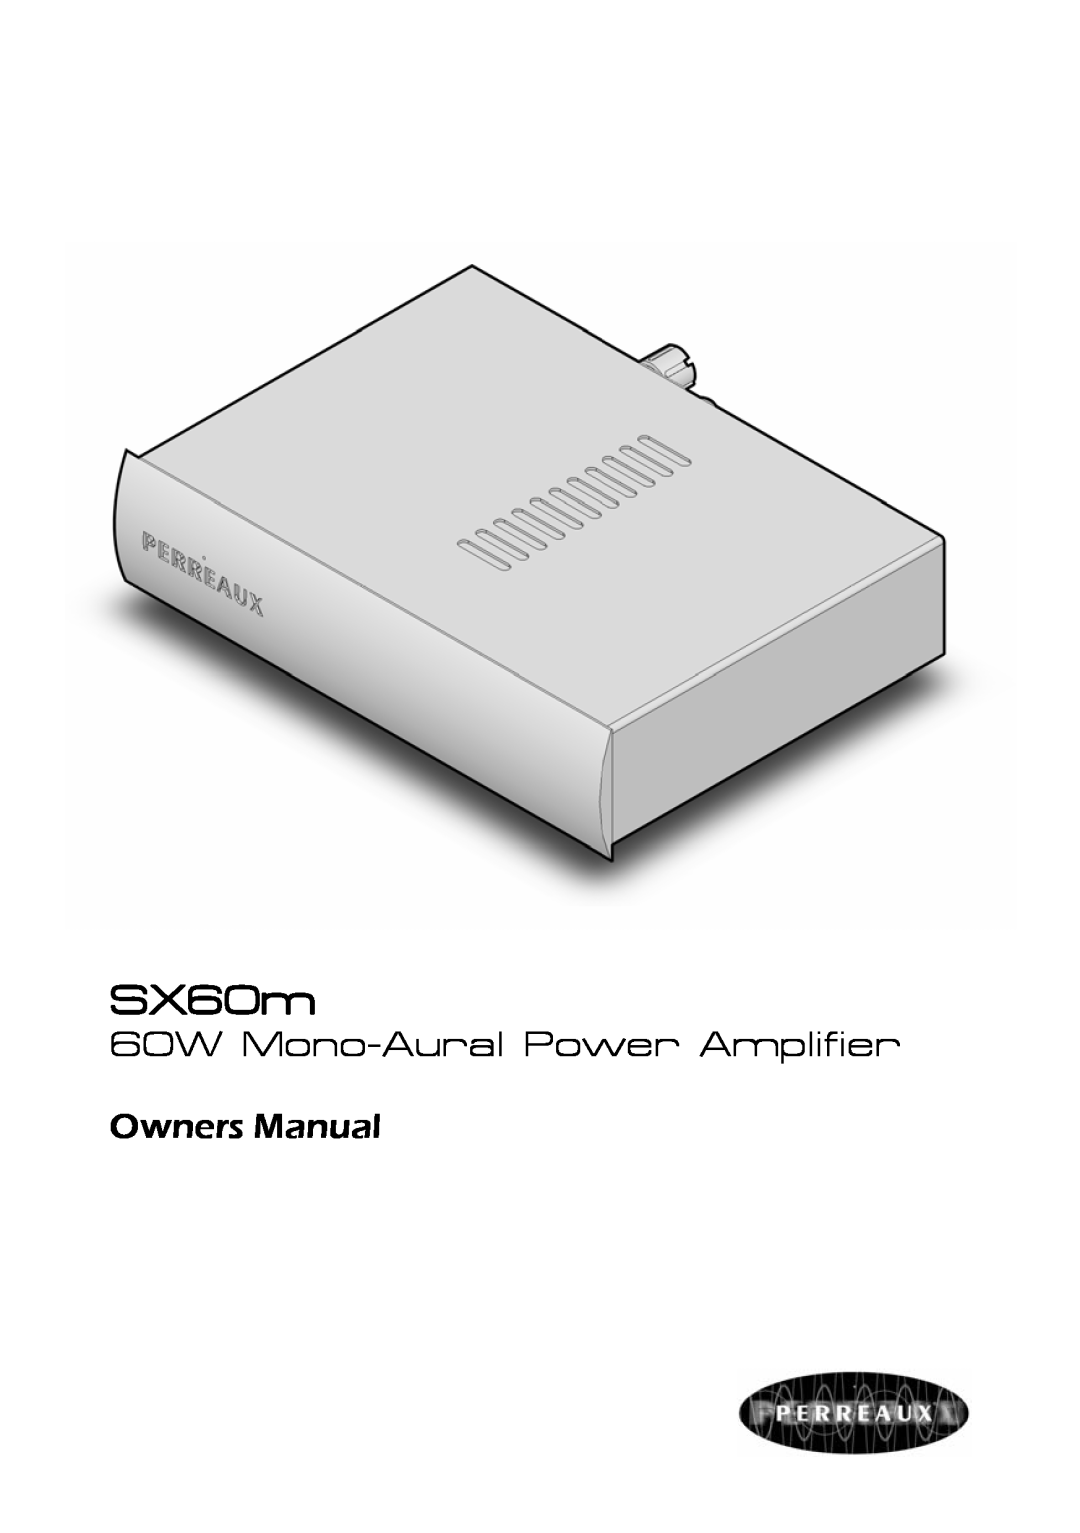 Perreaux SX60m manual 60W Mono-AuralPower Amplifier 